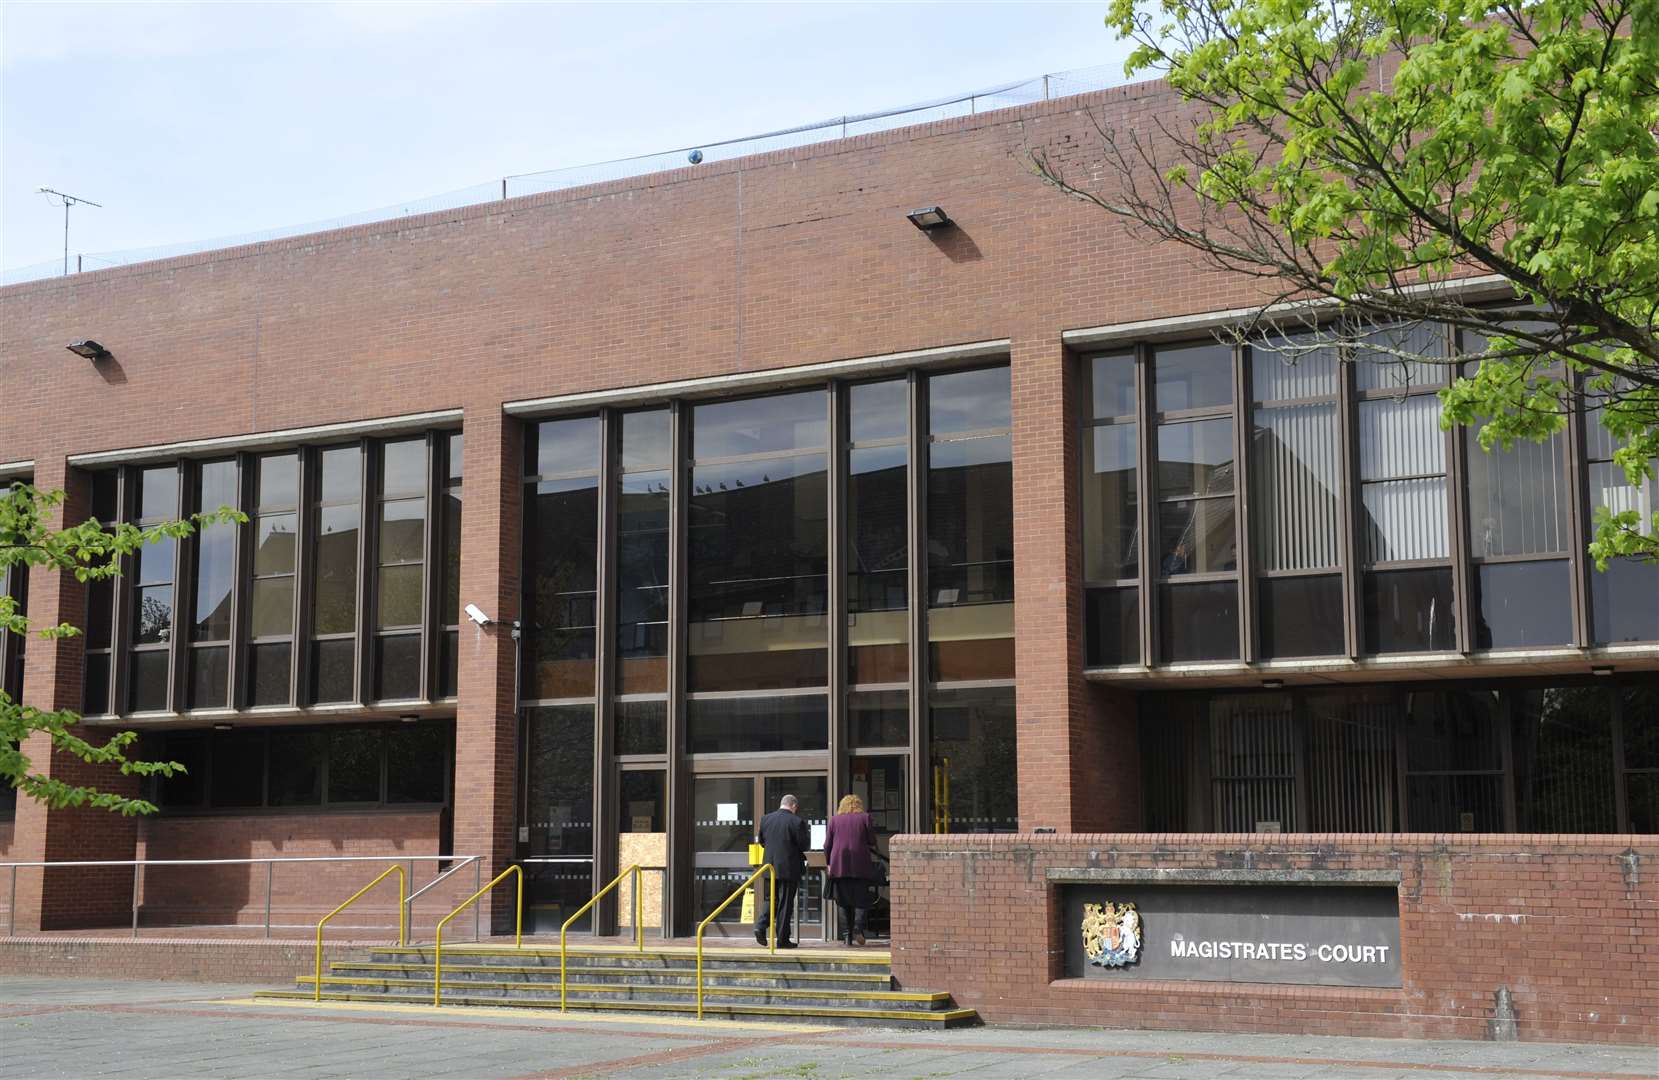 Jay-Jay Baker was sentenced at Folkestone Magistrates' Court